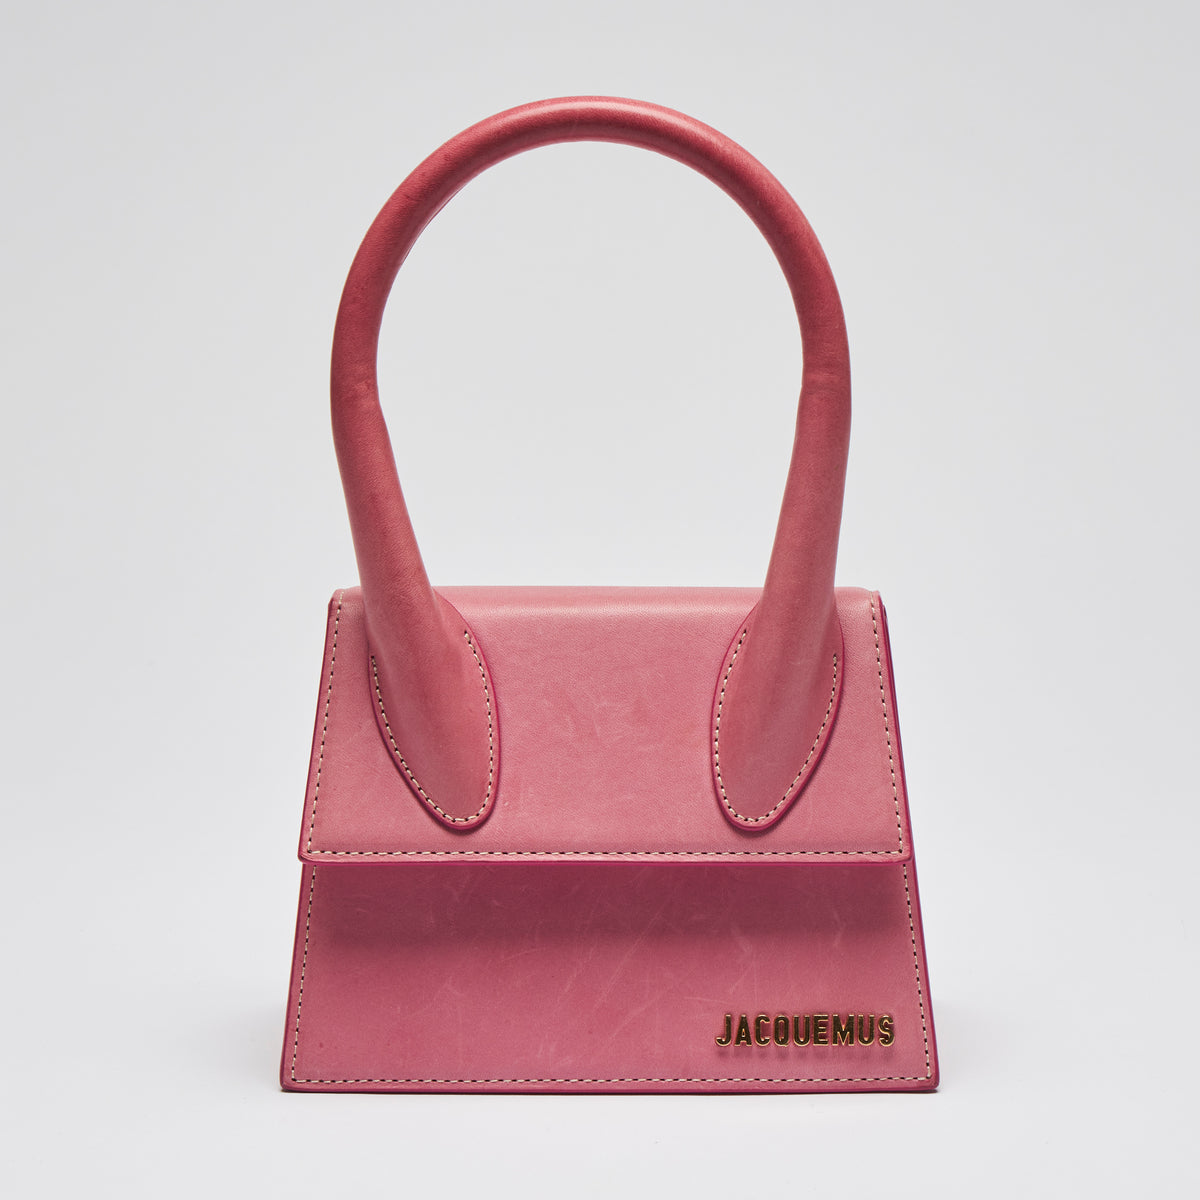 Pre-Loved Pink Leather Single Top Handle Mini Bag with Removable/Adjustable Shoulder Strap. (Front)